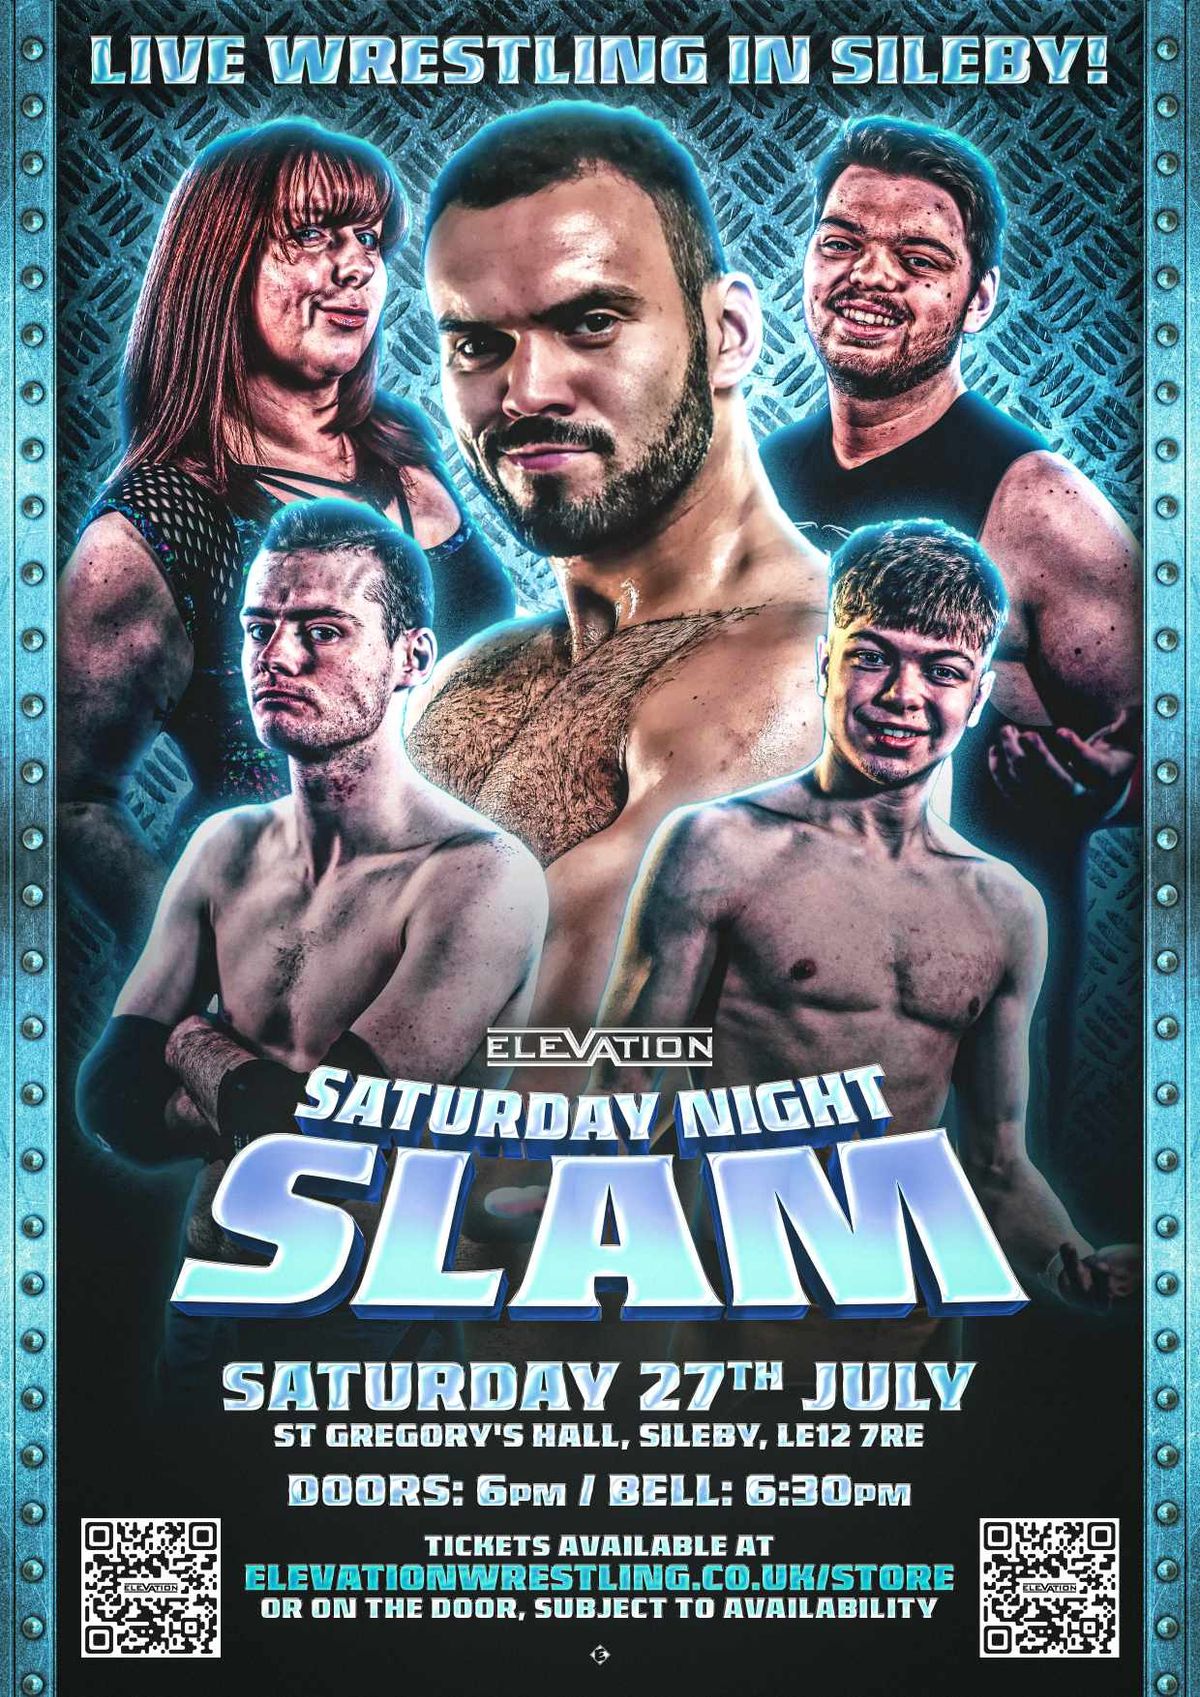 Saturday July 27th - Elevation Presents "Saturday Night Slam" (Sileby)